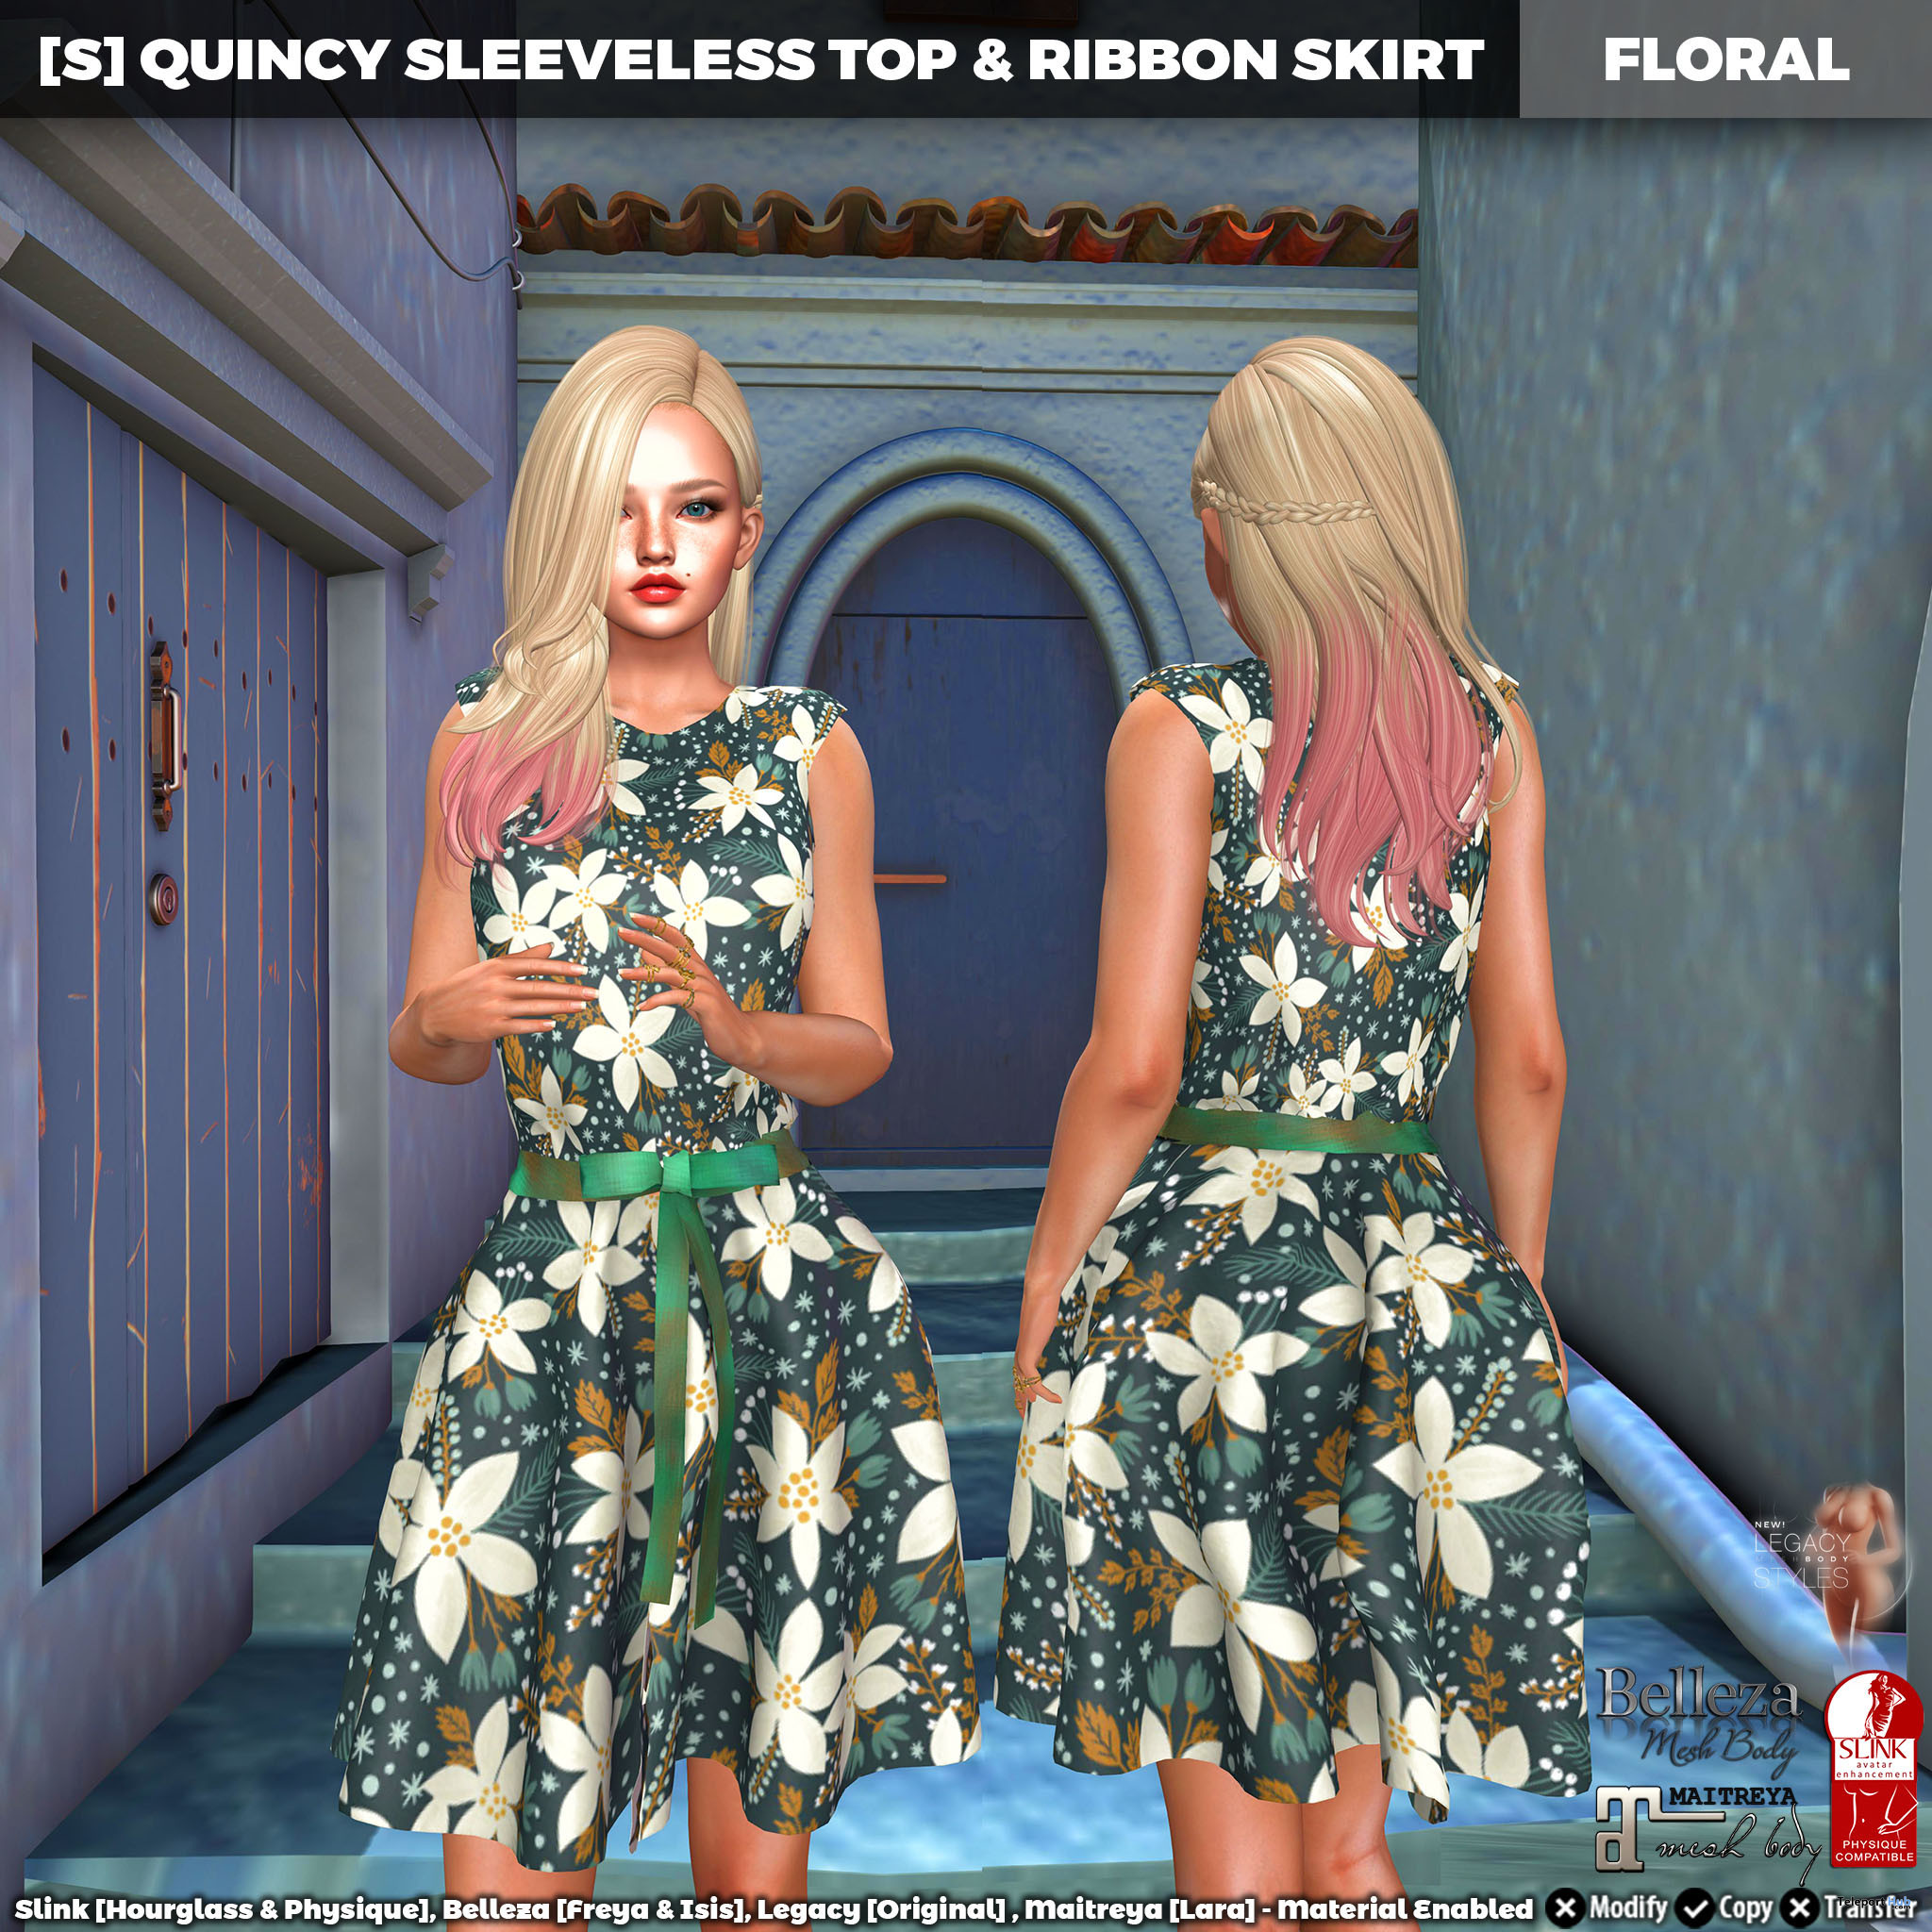 New Release: [S] Quincy Sleeveless Top & Ribbon Skirt by [satus Inc] - Teleport Hub - teleporthub.com